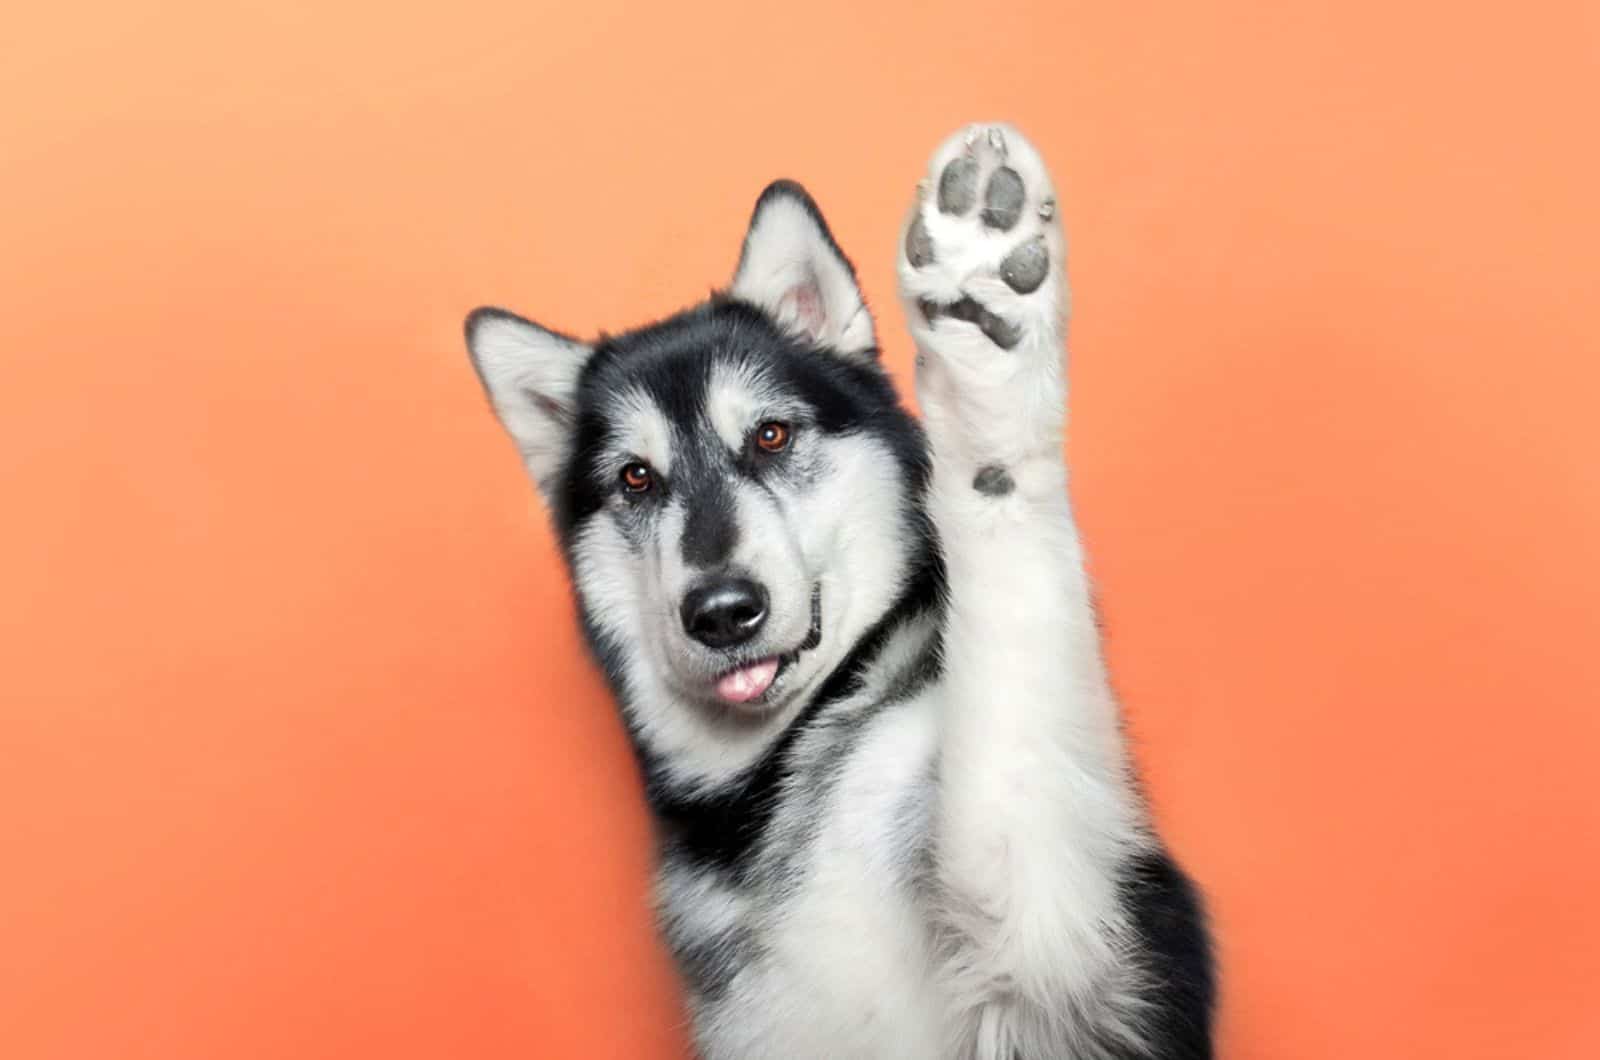 dog raise a paw up